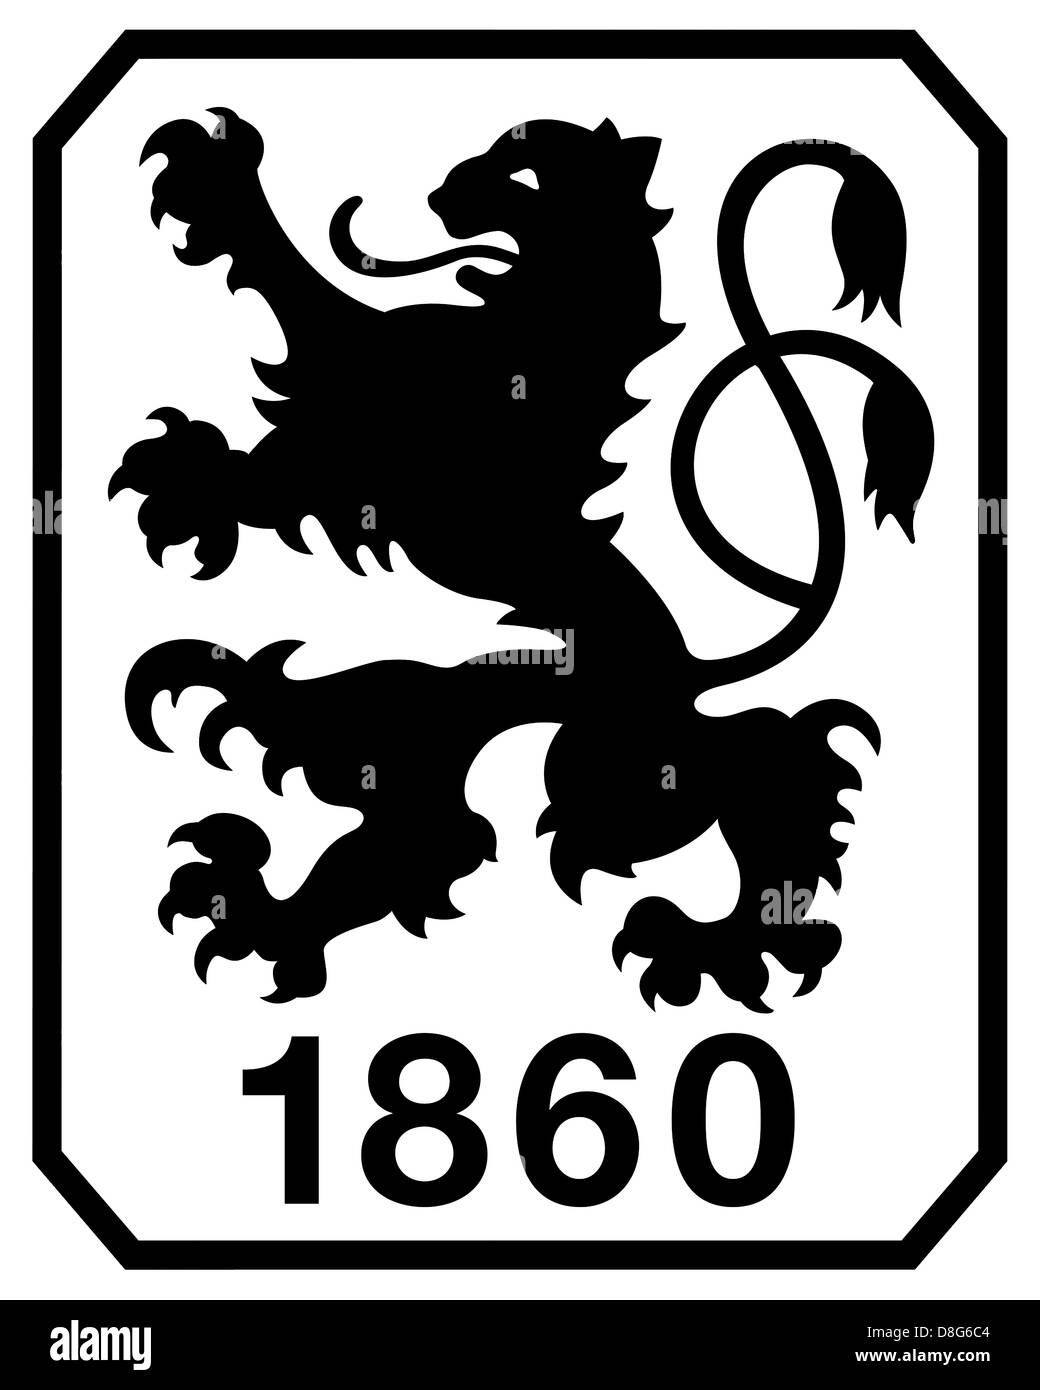 Logo de l'équipe de football allemande TSV 1860 Munich. Banque D'Images